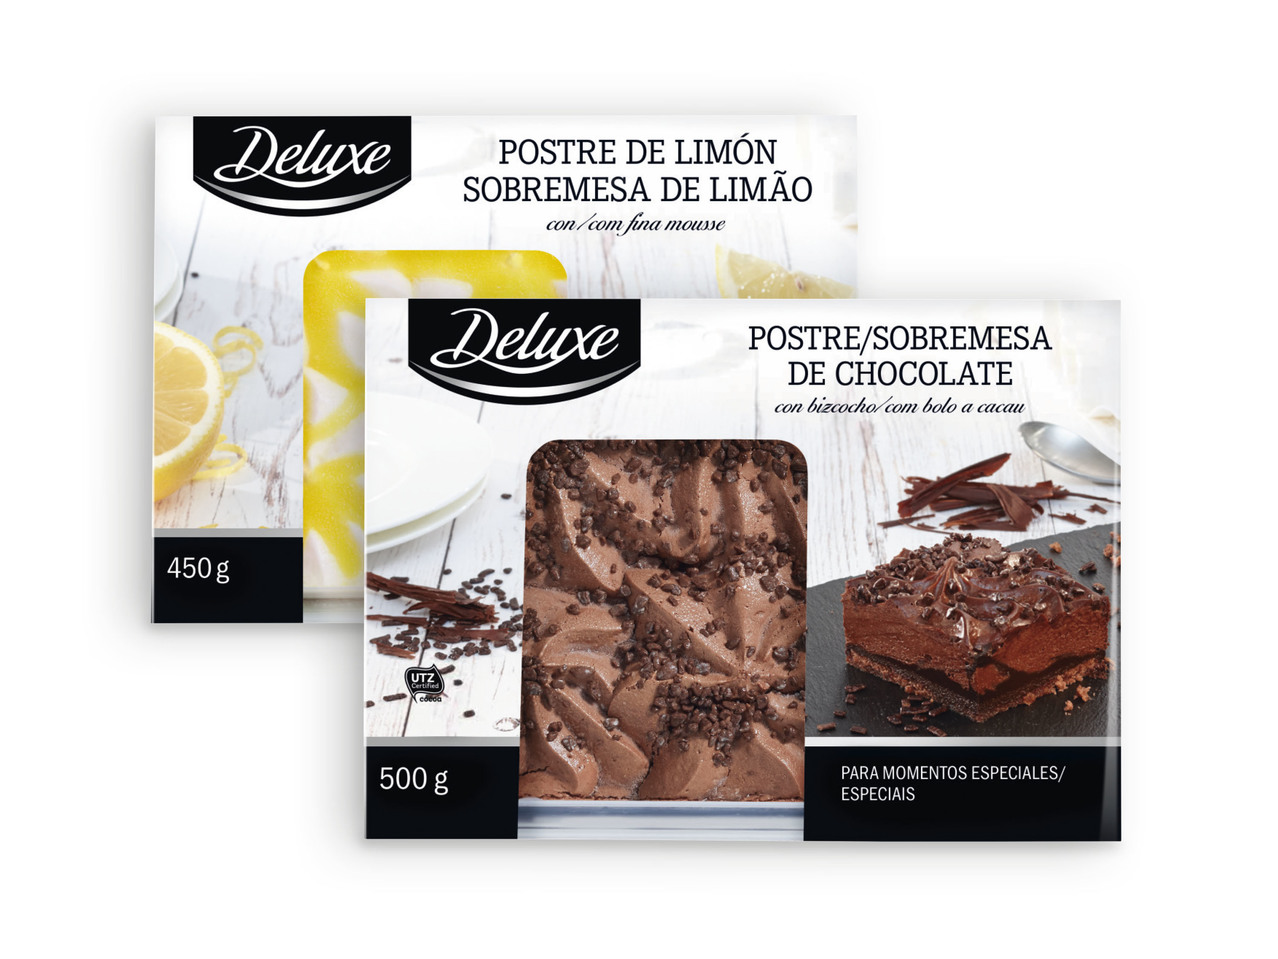 DELUXE(R) Sobremesa de Chocolate / Limão